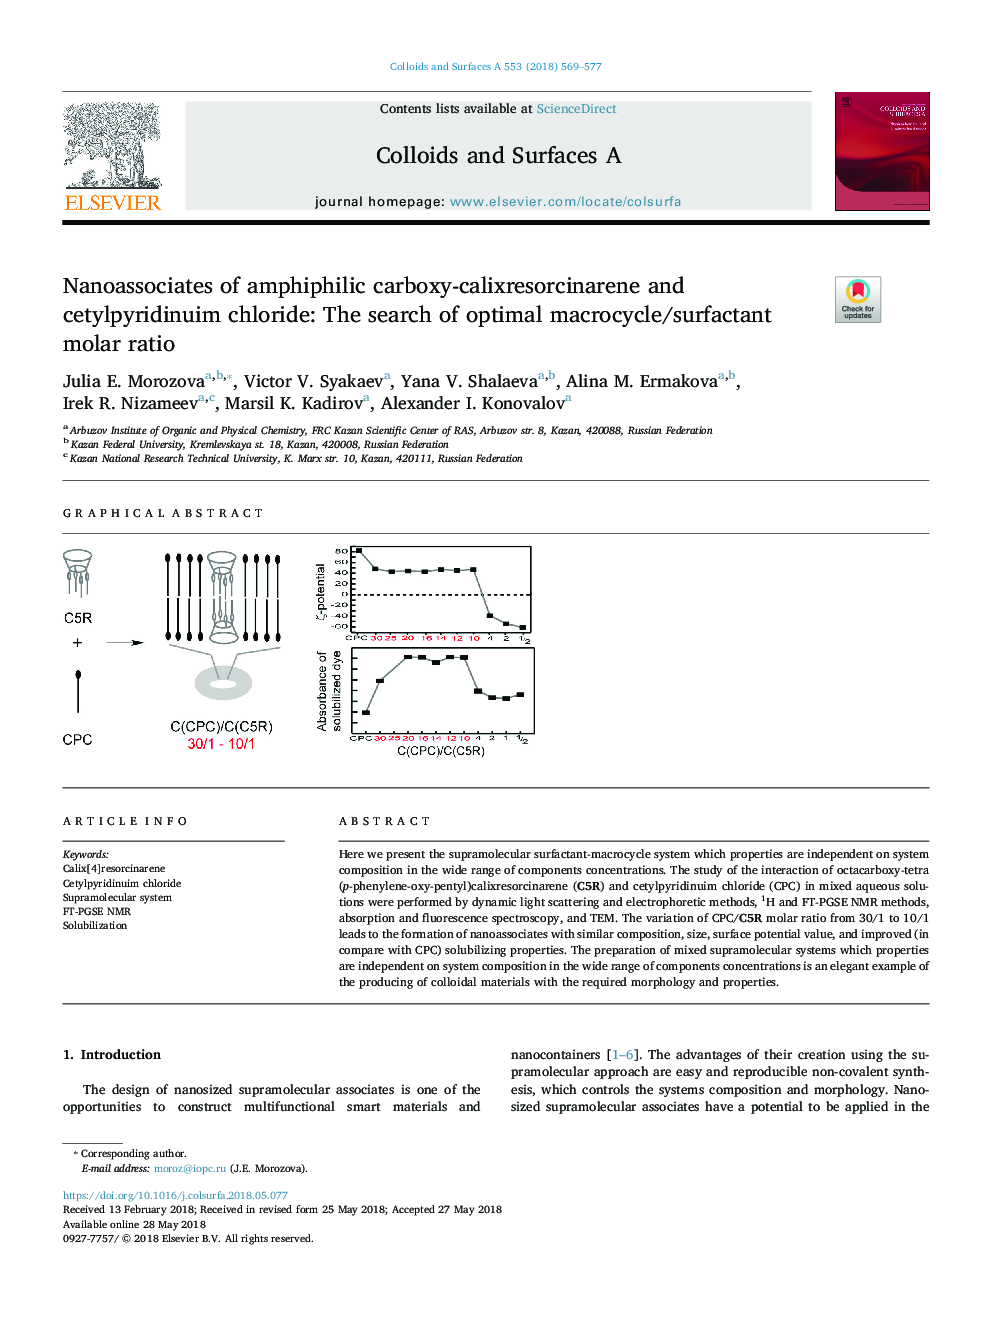 Nanoassociates of amphiphilic carboxy-calixresorcinarene and cetylpyridinuim chloride: The search of optimal macrocycle/surfactant molar ratio